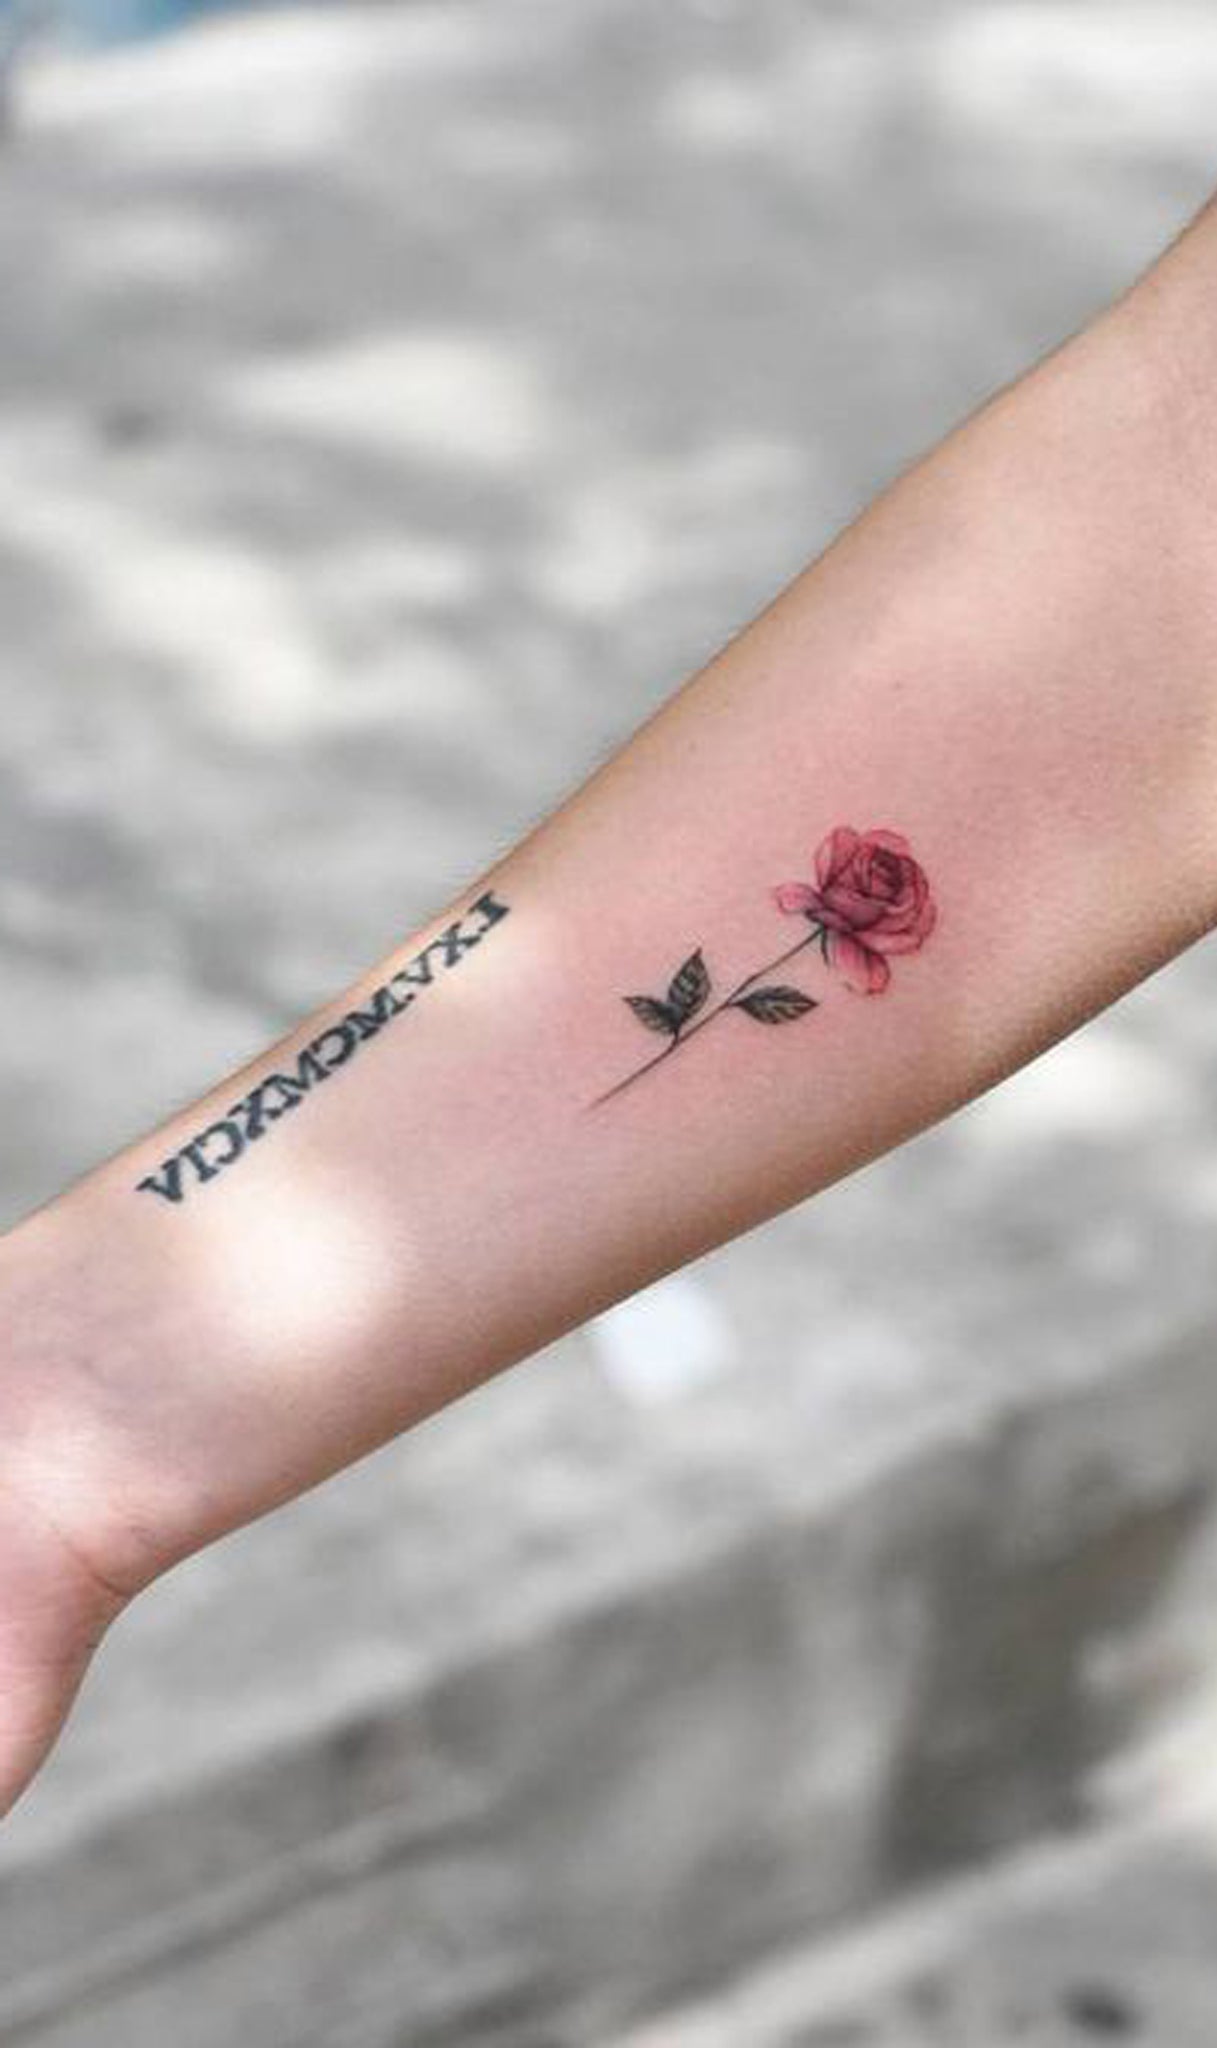 Cute Watercolor Small Rose Forearm Tattoo Ideas for Women - www.MyBodiArt.com #tattoos